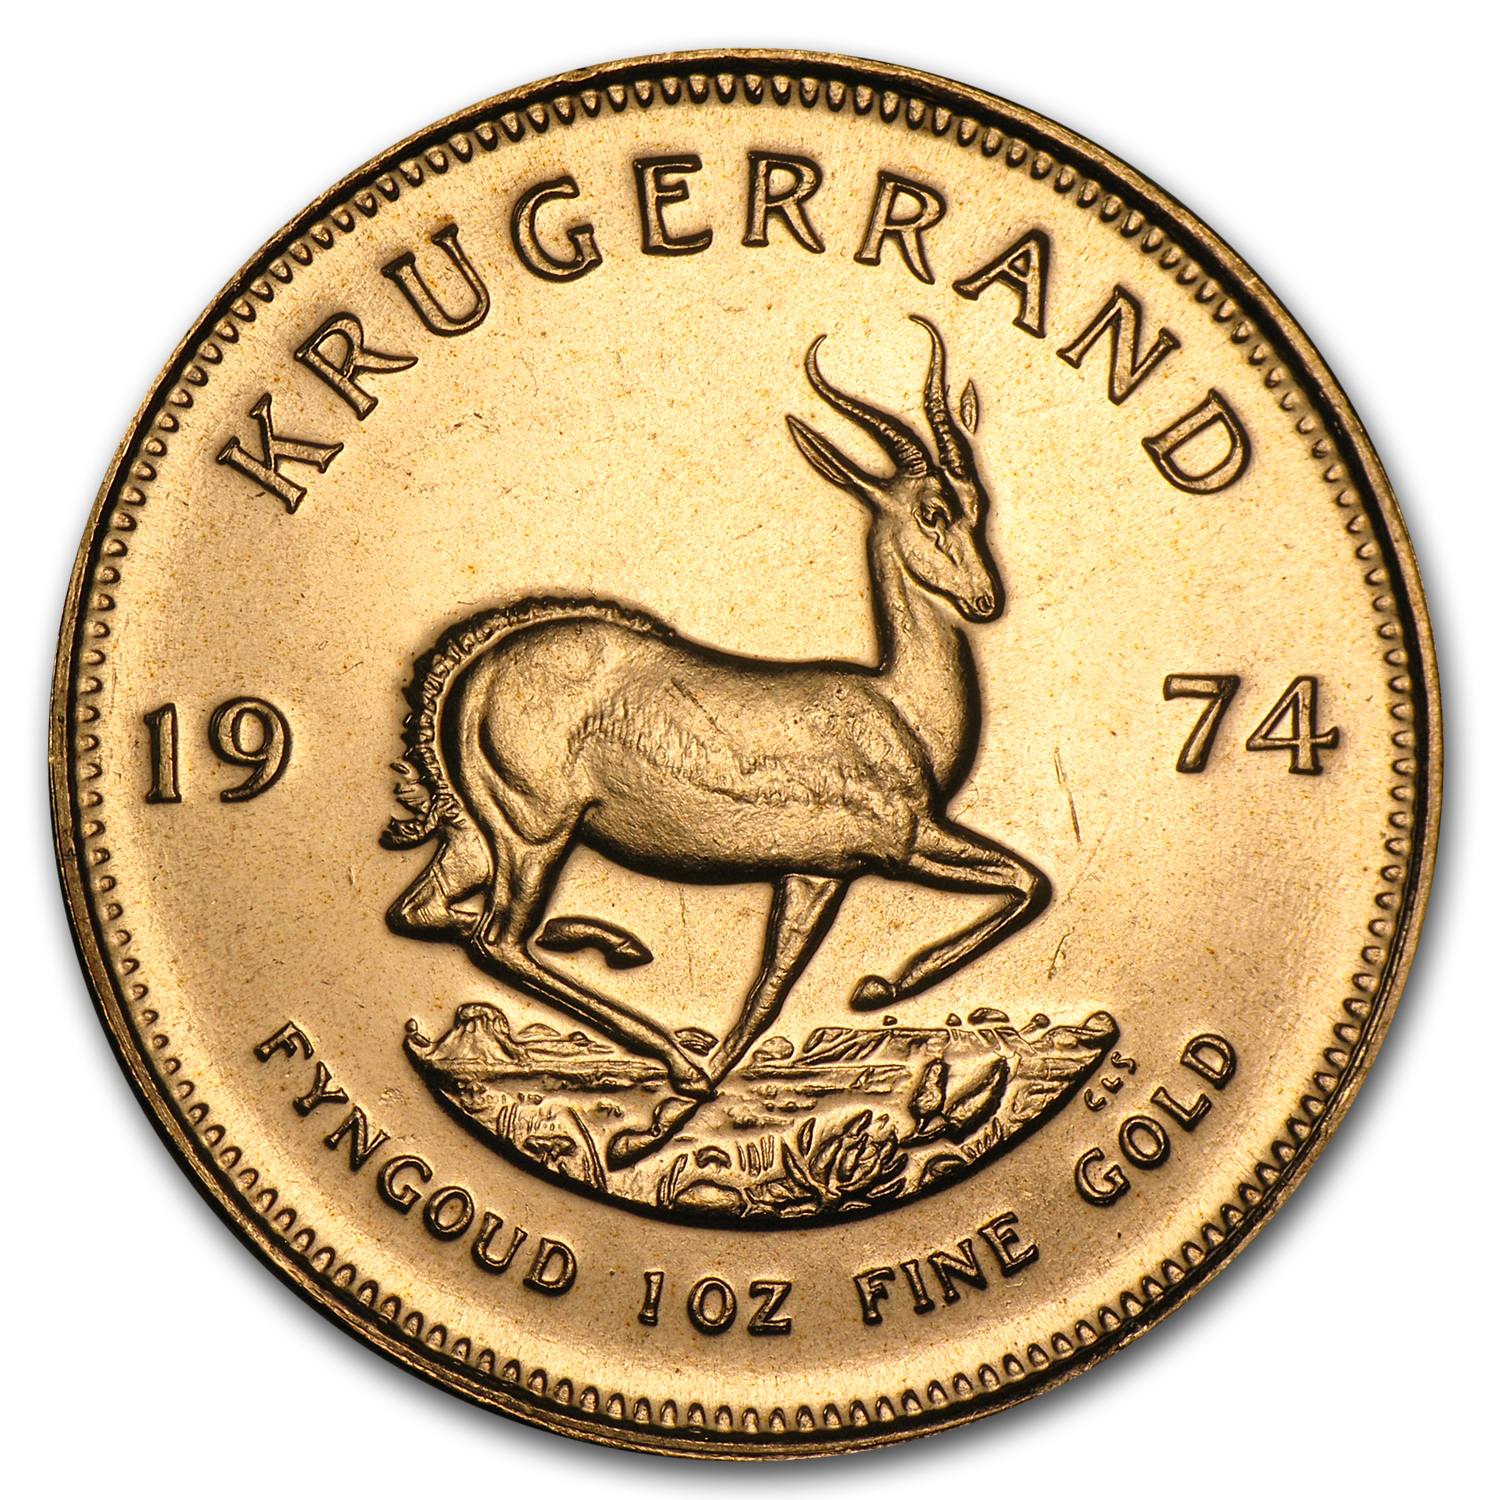 Buy 1974 South Africa 1 oz Gold Krugerrand BU - Click Image to Close